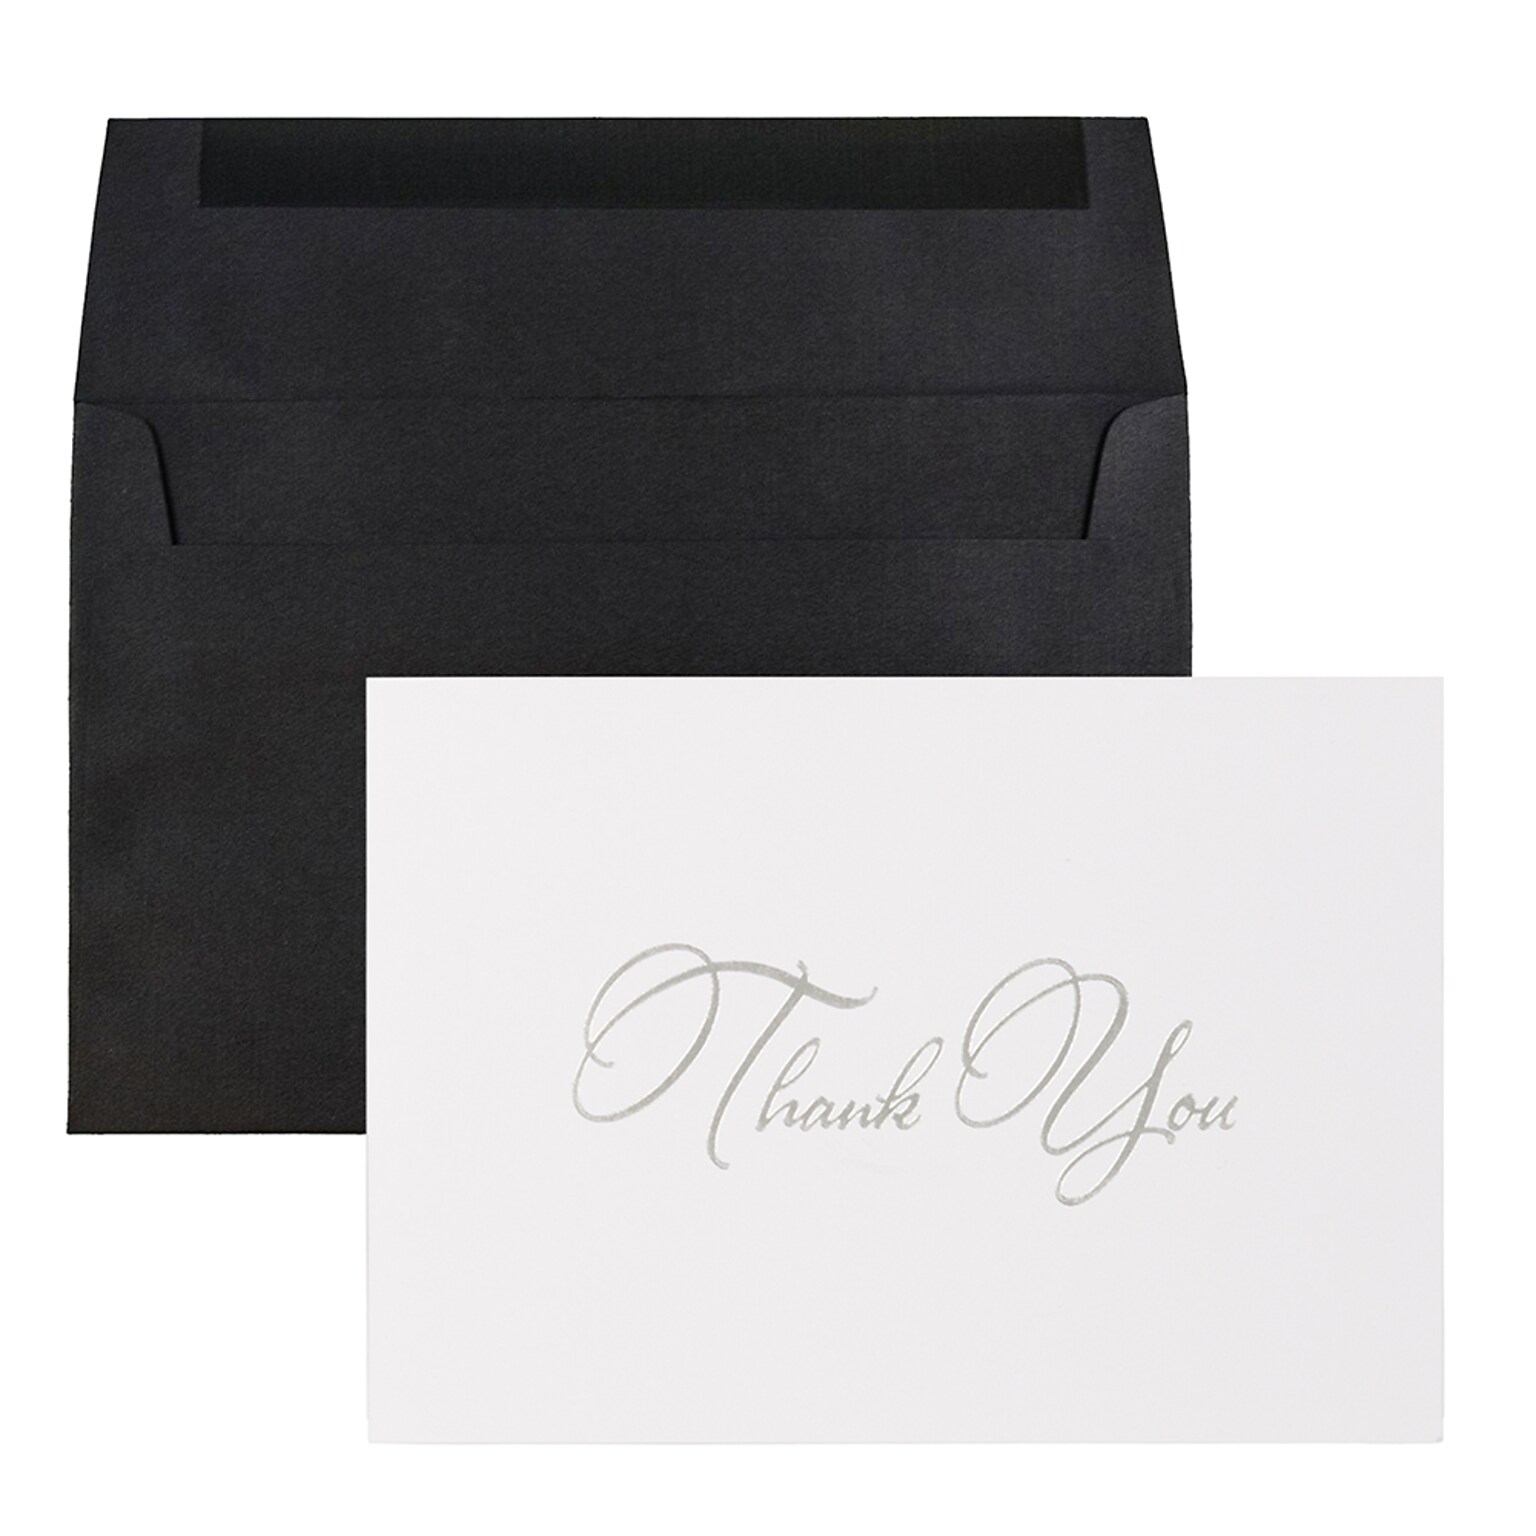 JAM PAPER Thank You Card Sets, Silver Script Cards with Black Linen Envelopes, 25 Cards and Envelopes (526869900)